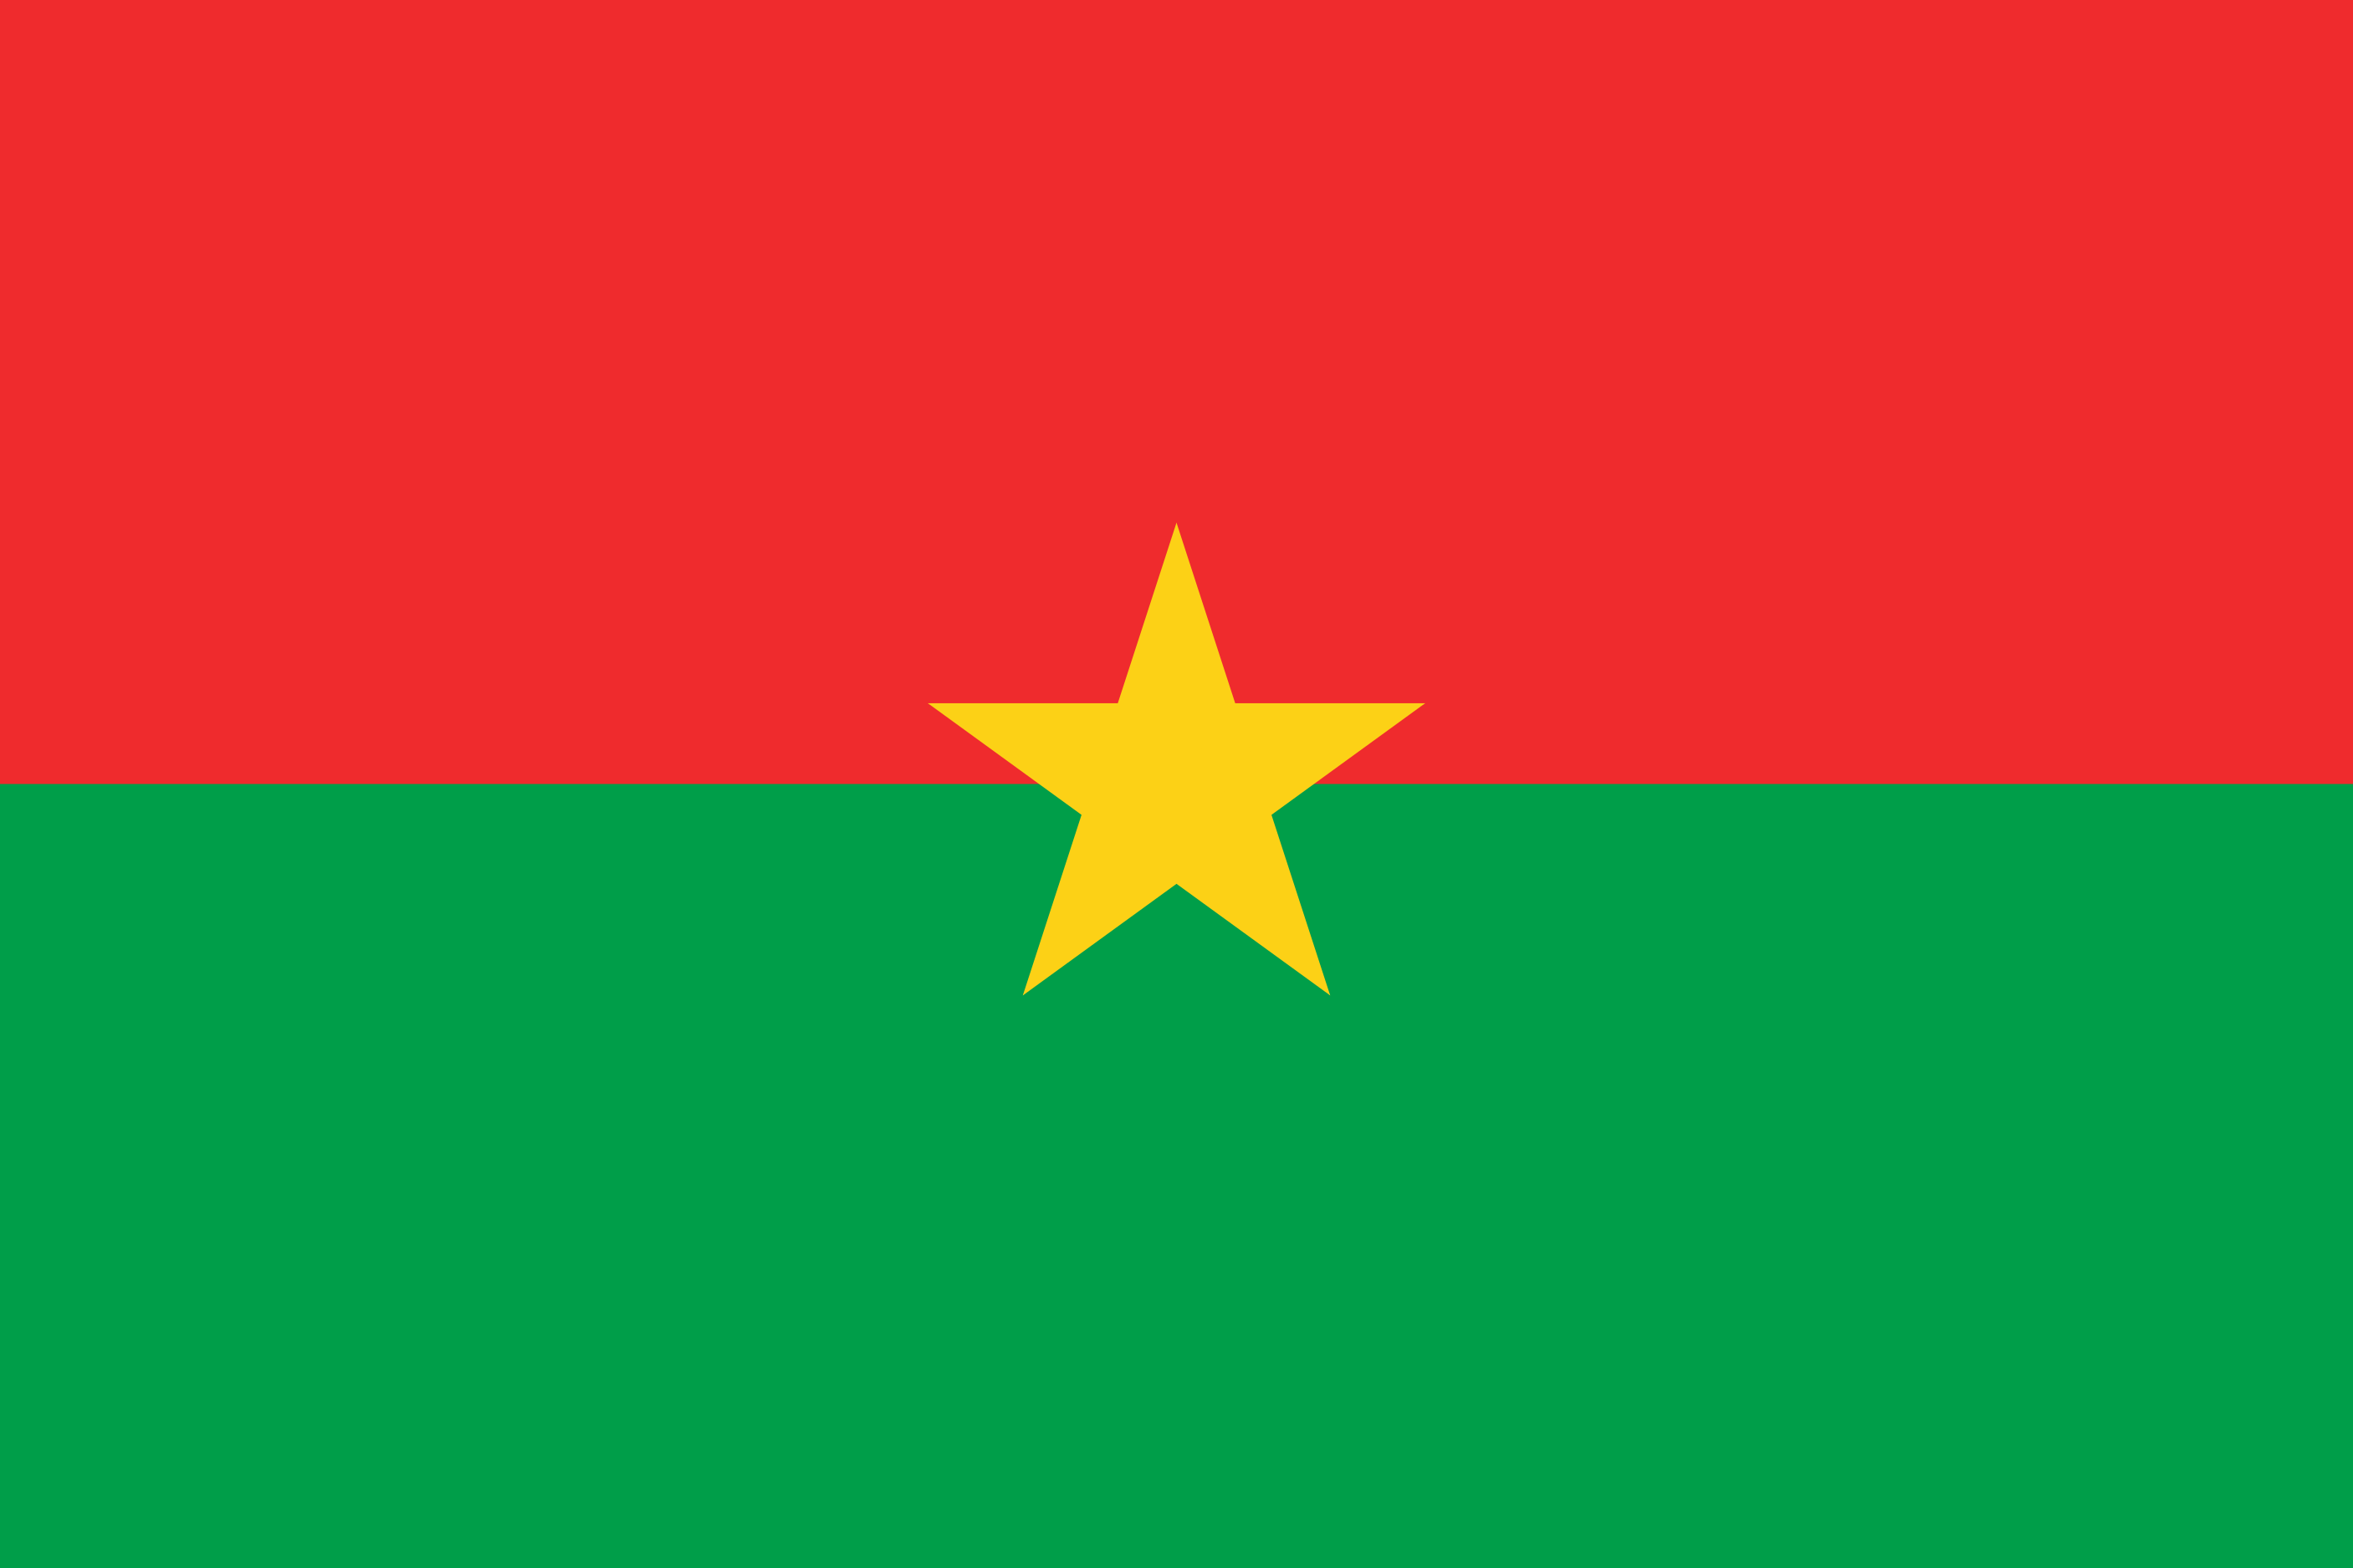 Burkina Faso Flag Image - Free Download